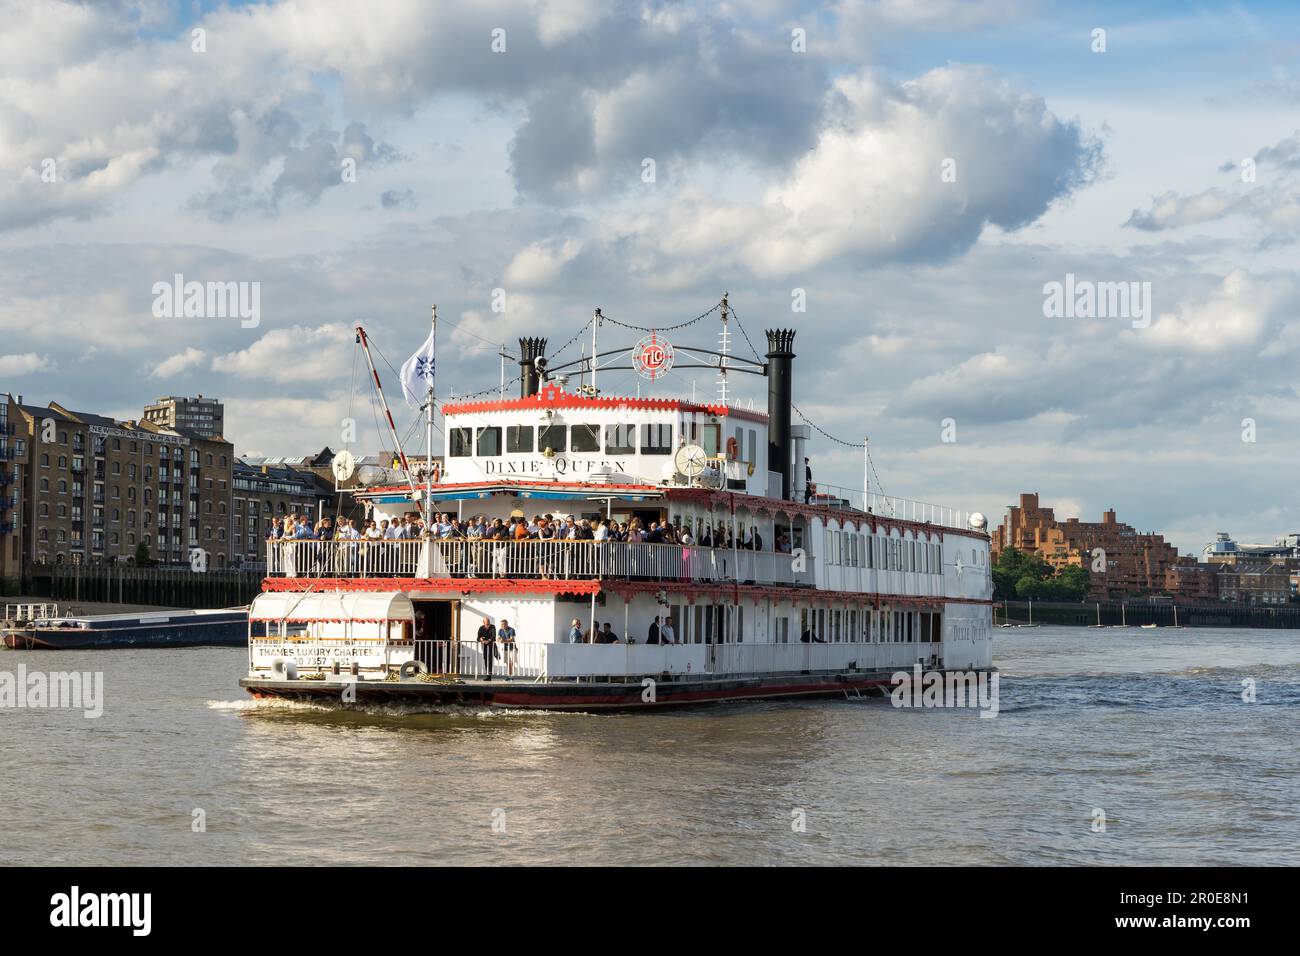 The Dixie Queen cruising along the River Thames Stock Photo